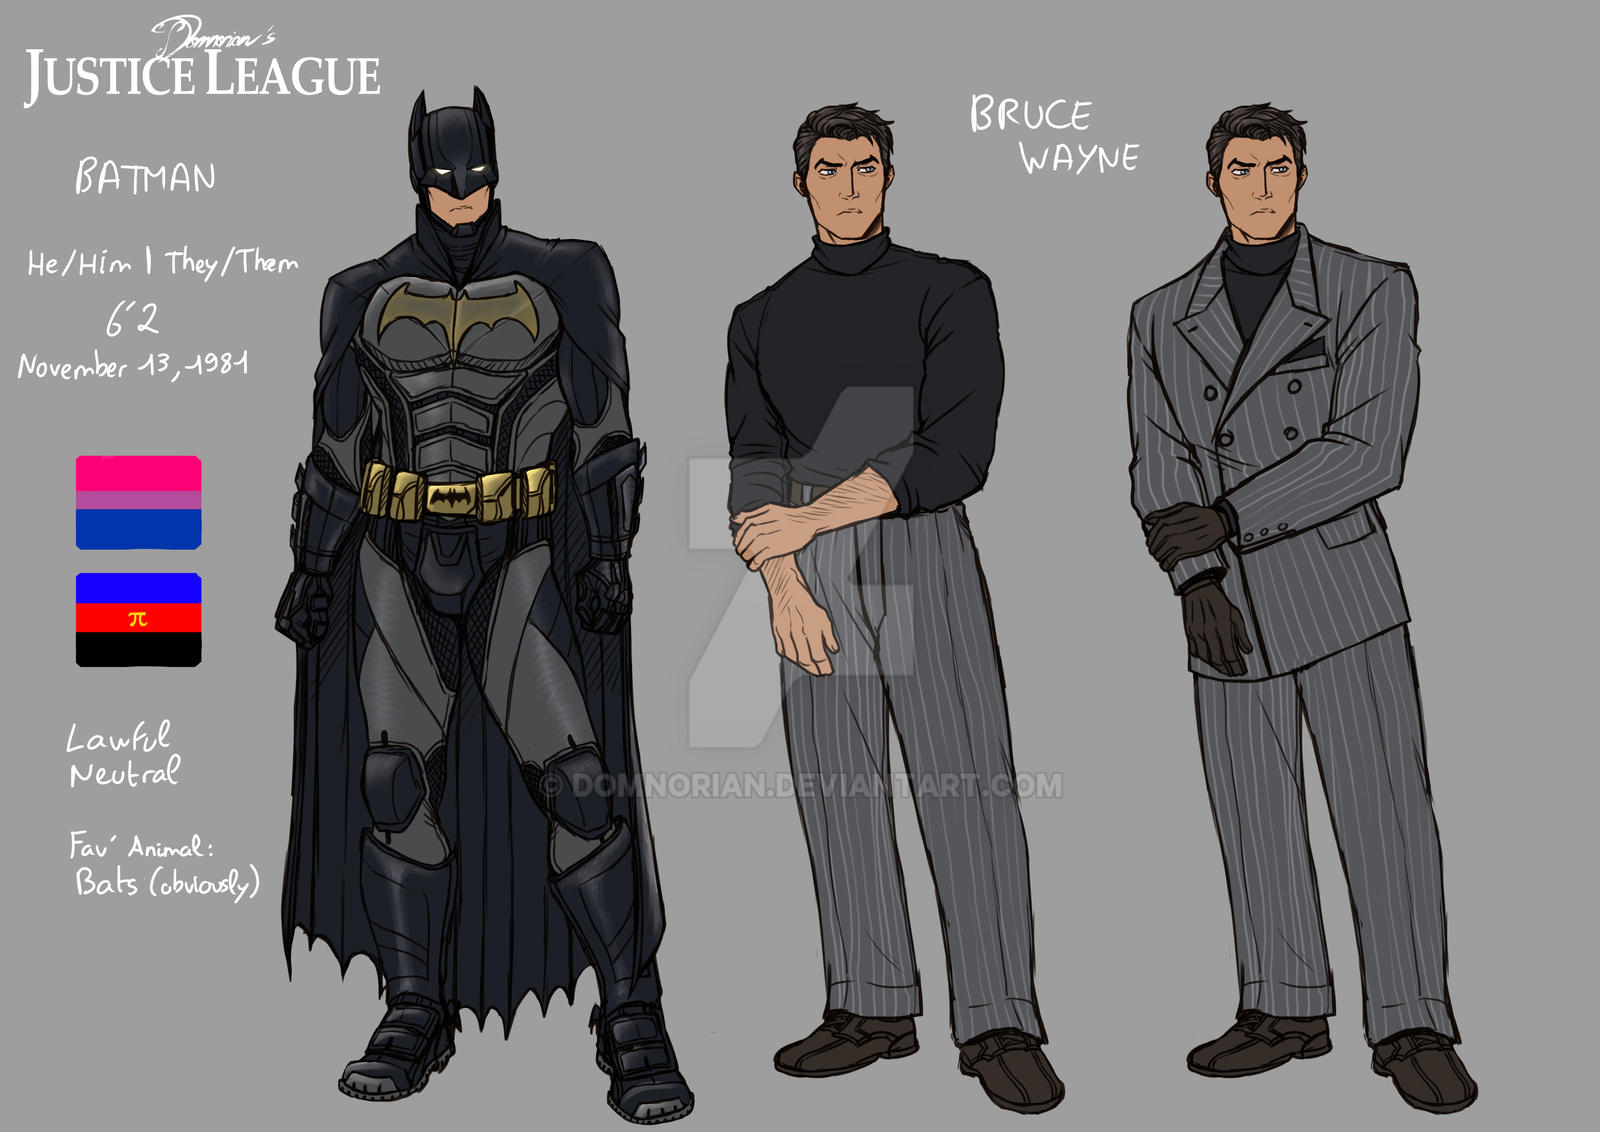 Batman (Bruce Wayne) Character Design by Domnorian on DeviantArt